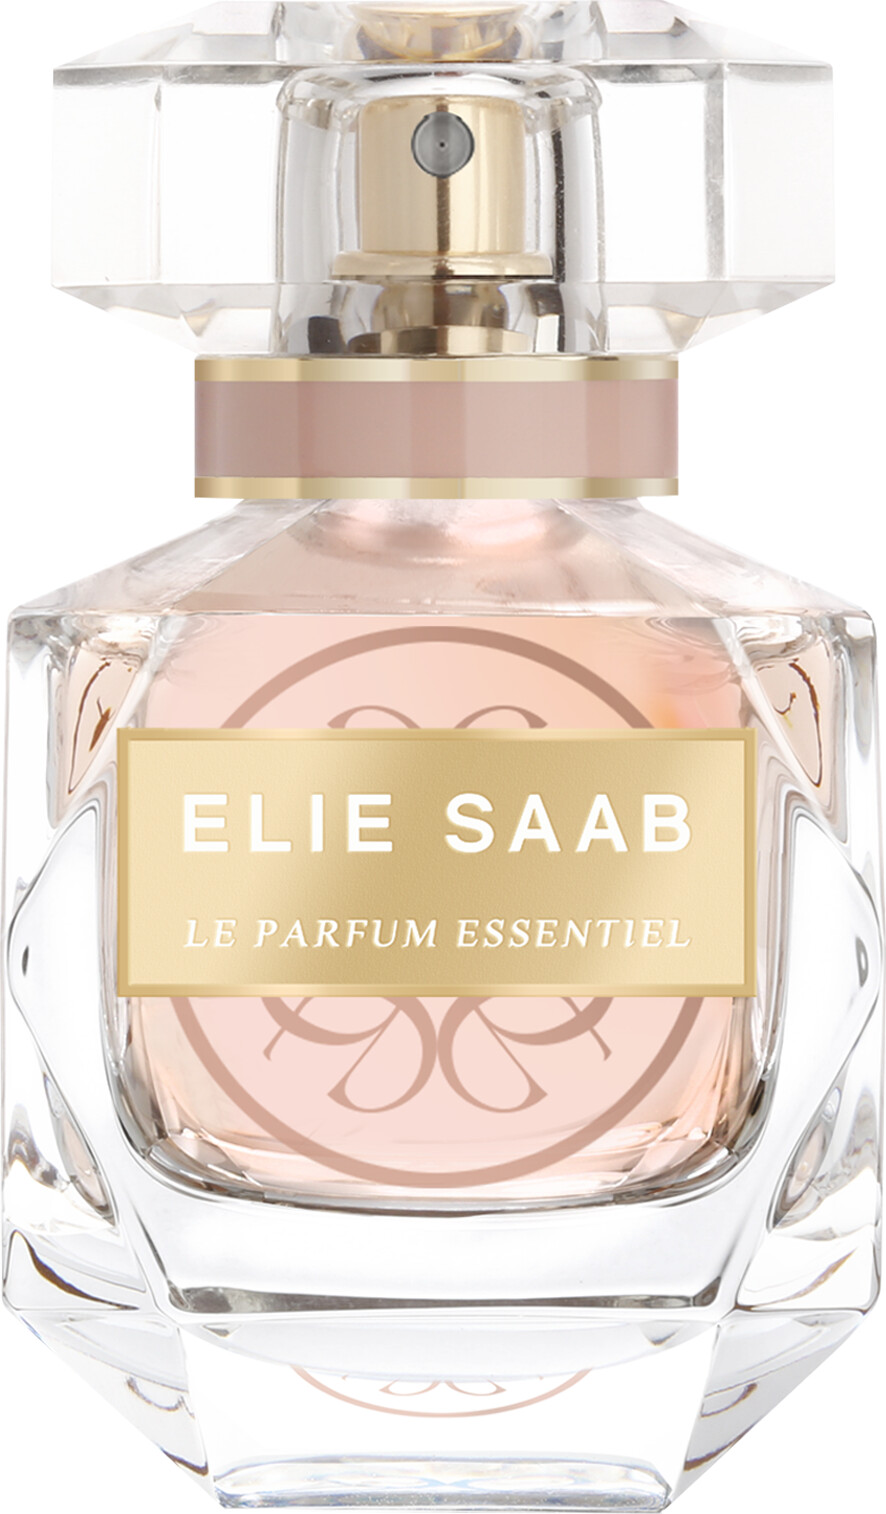 Elie Saab Le Parfum Essentiel Eau de Parfum Spray 30ml